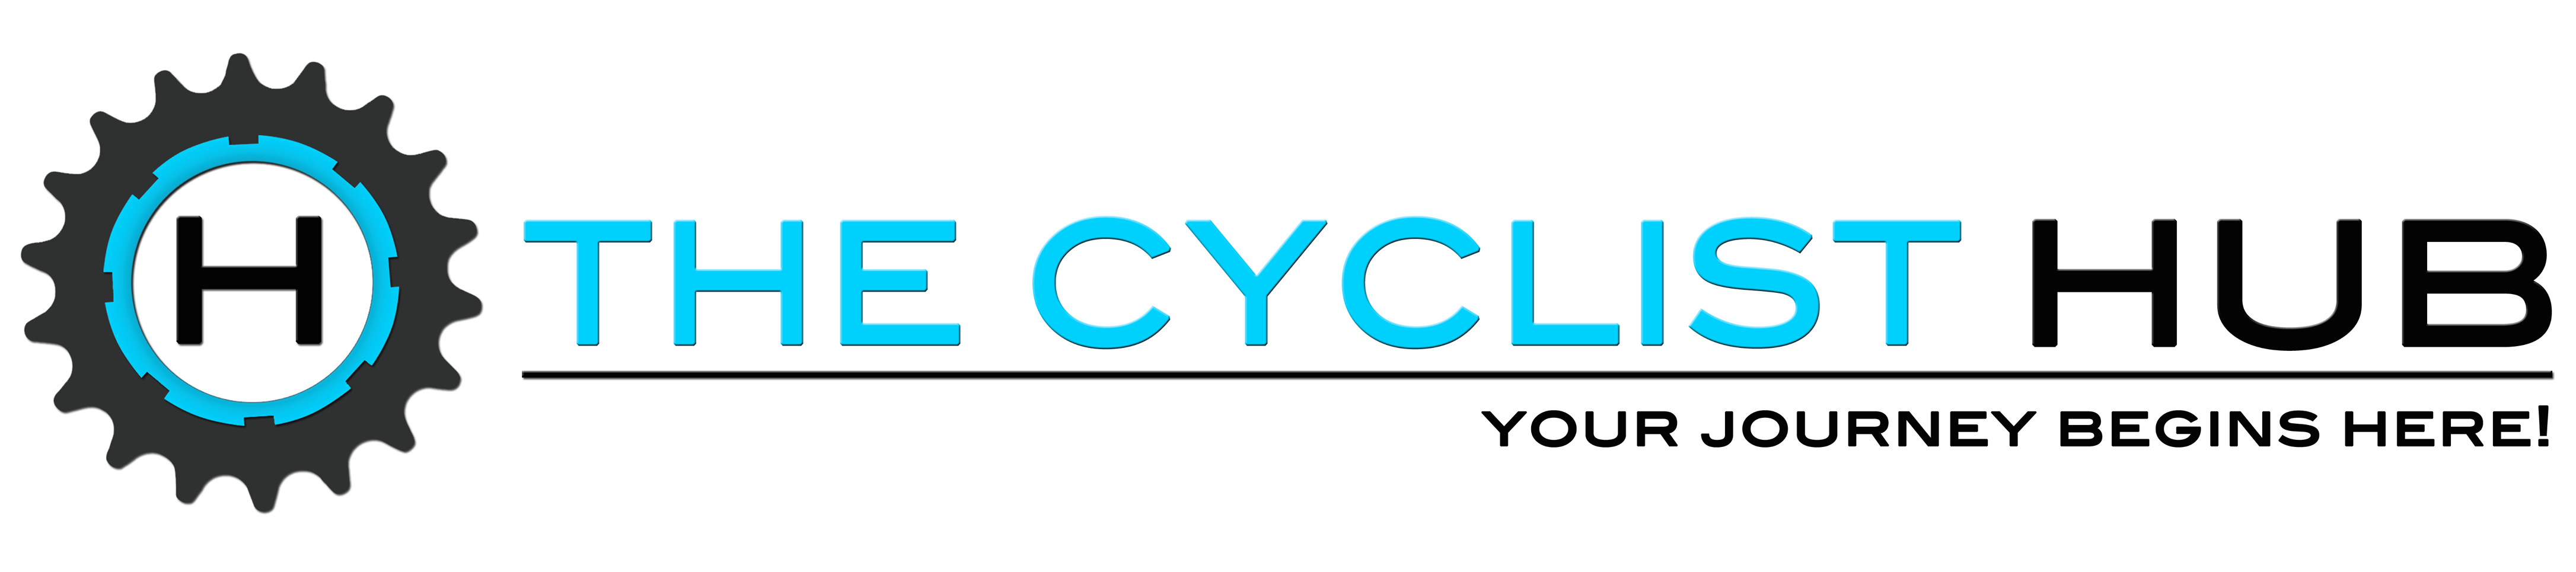 The Cyclist Hub Logo